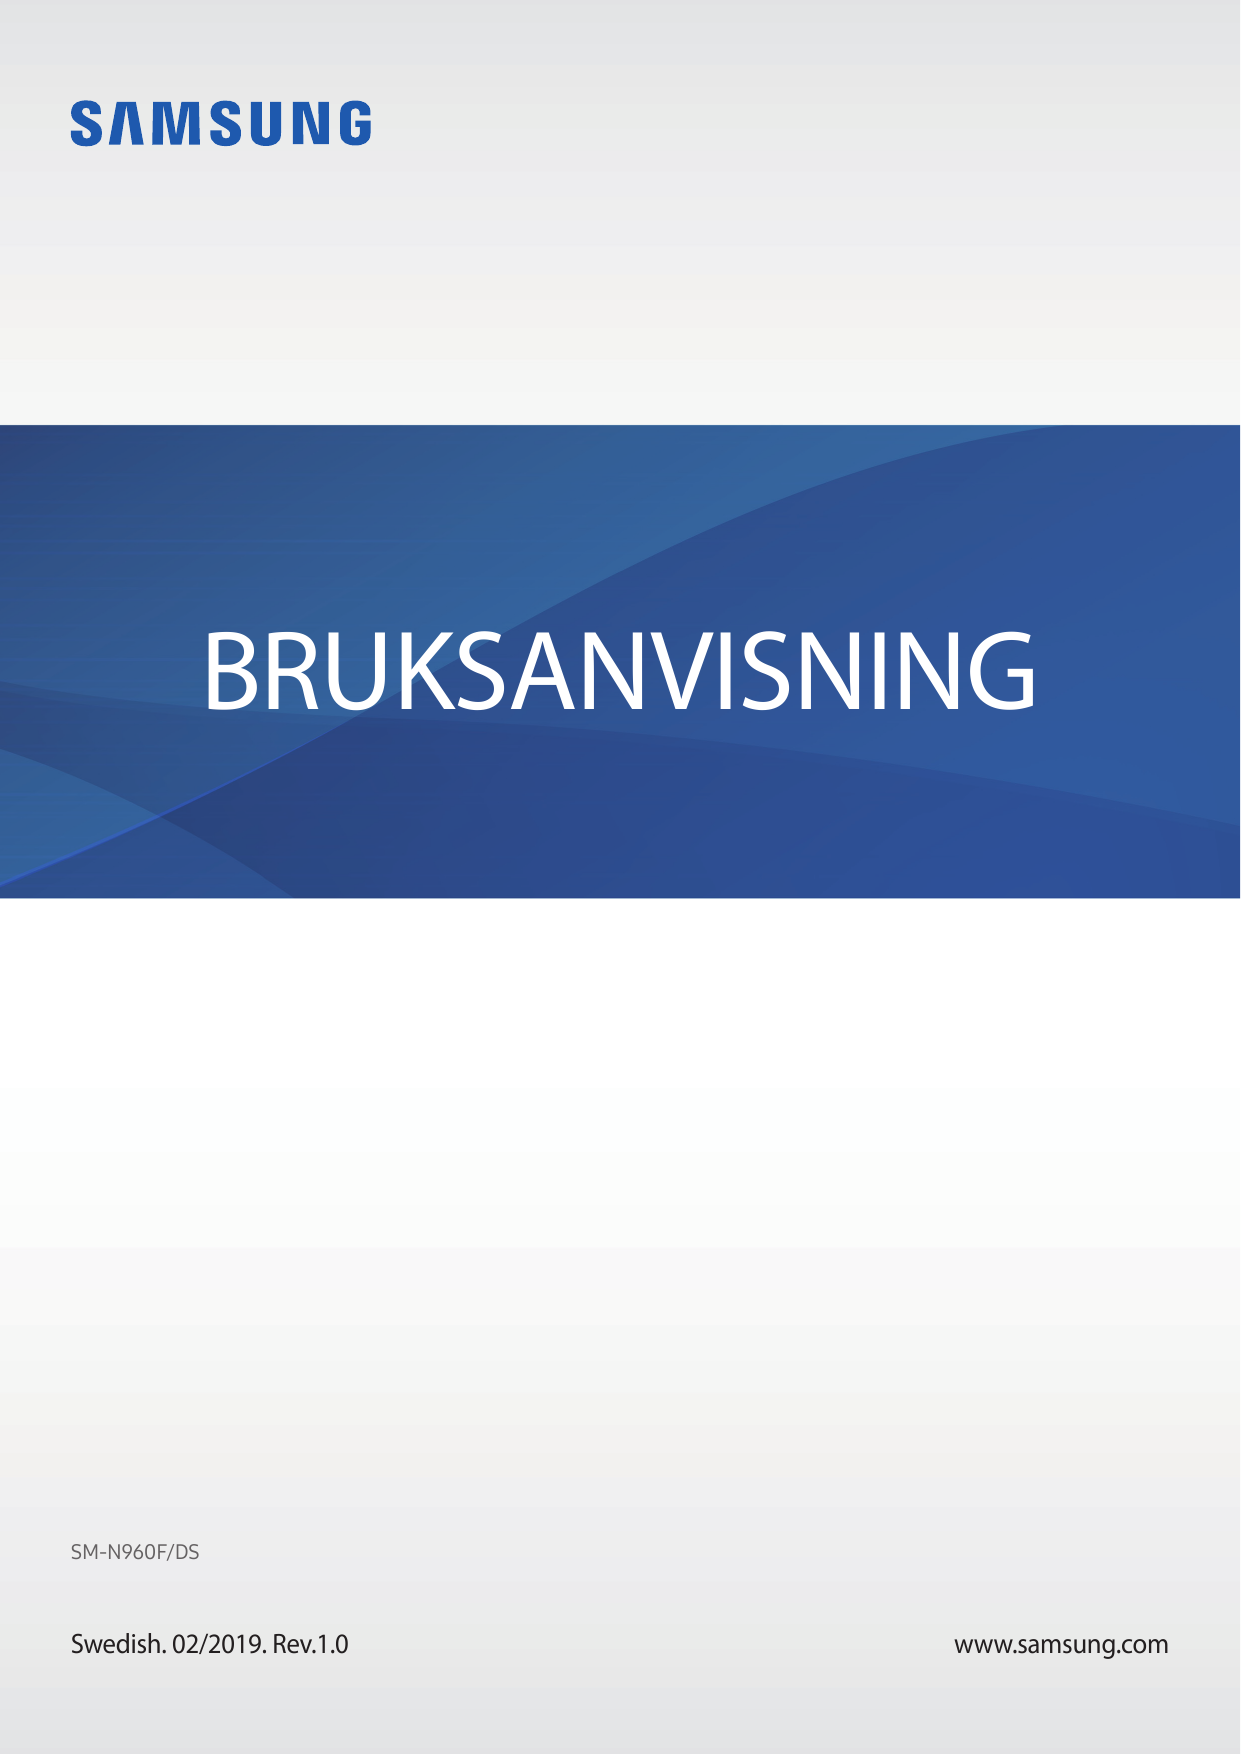 BRUKSANVISNINGSM-N960F/DSSwedish. 02/2019. Rev.1.0www.samsung.com